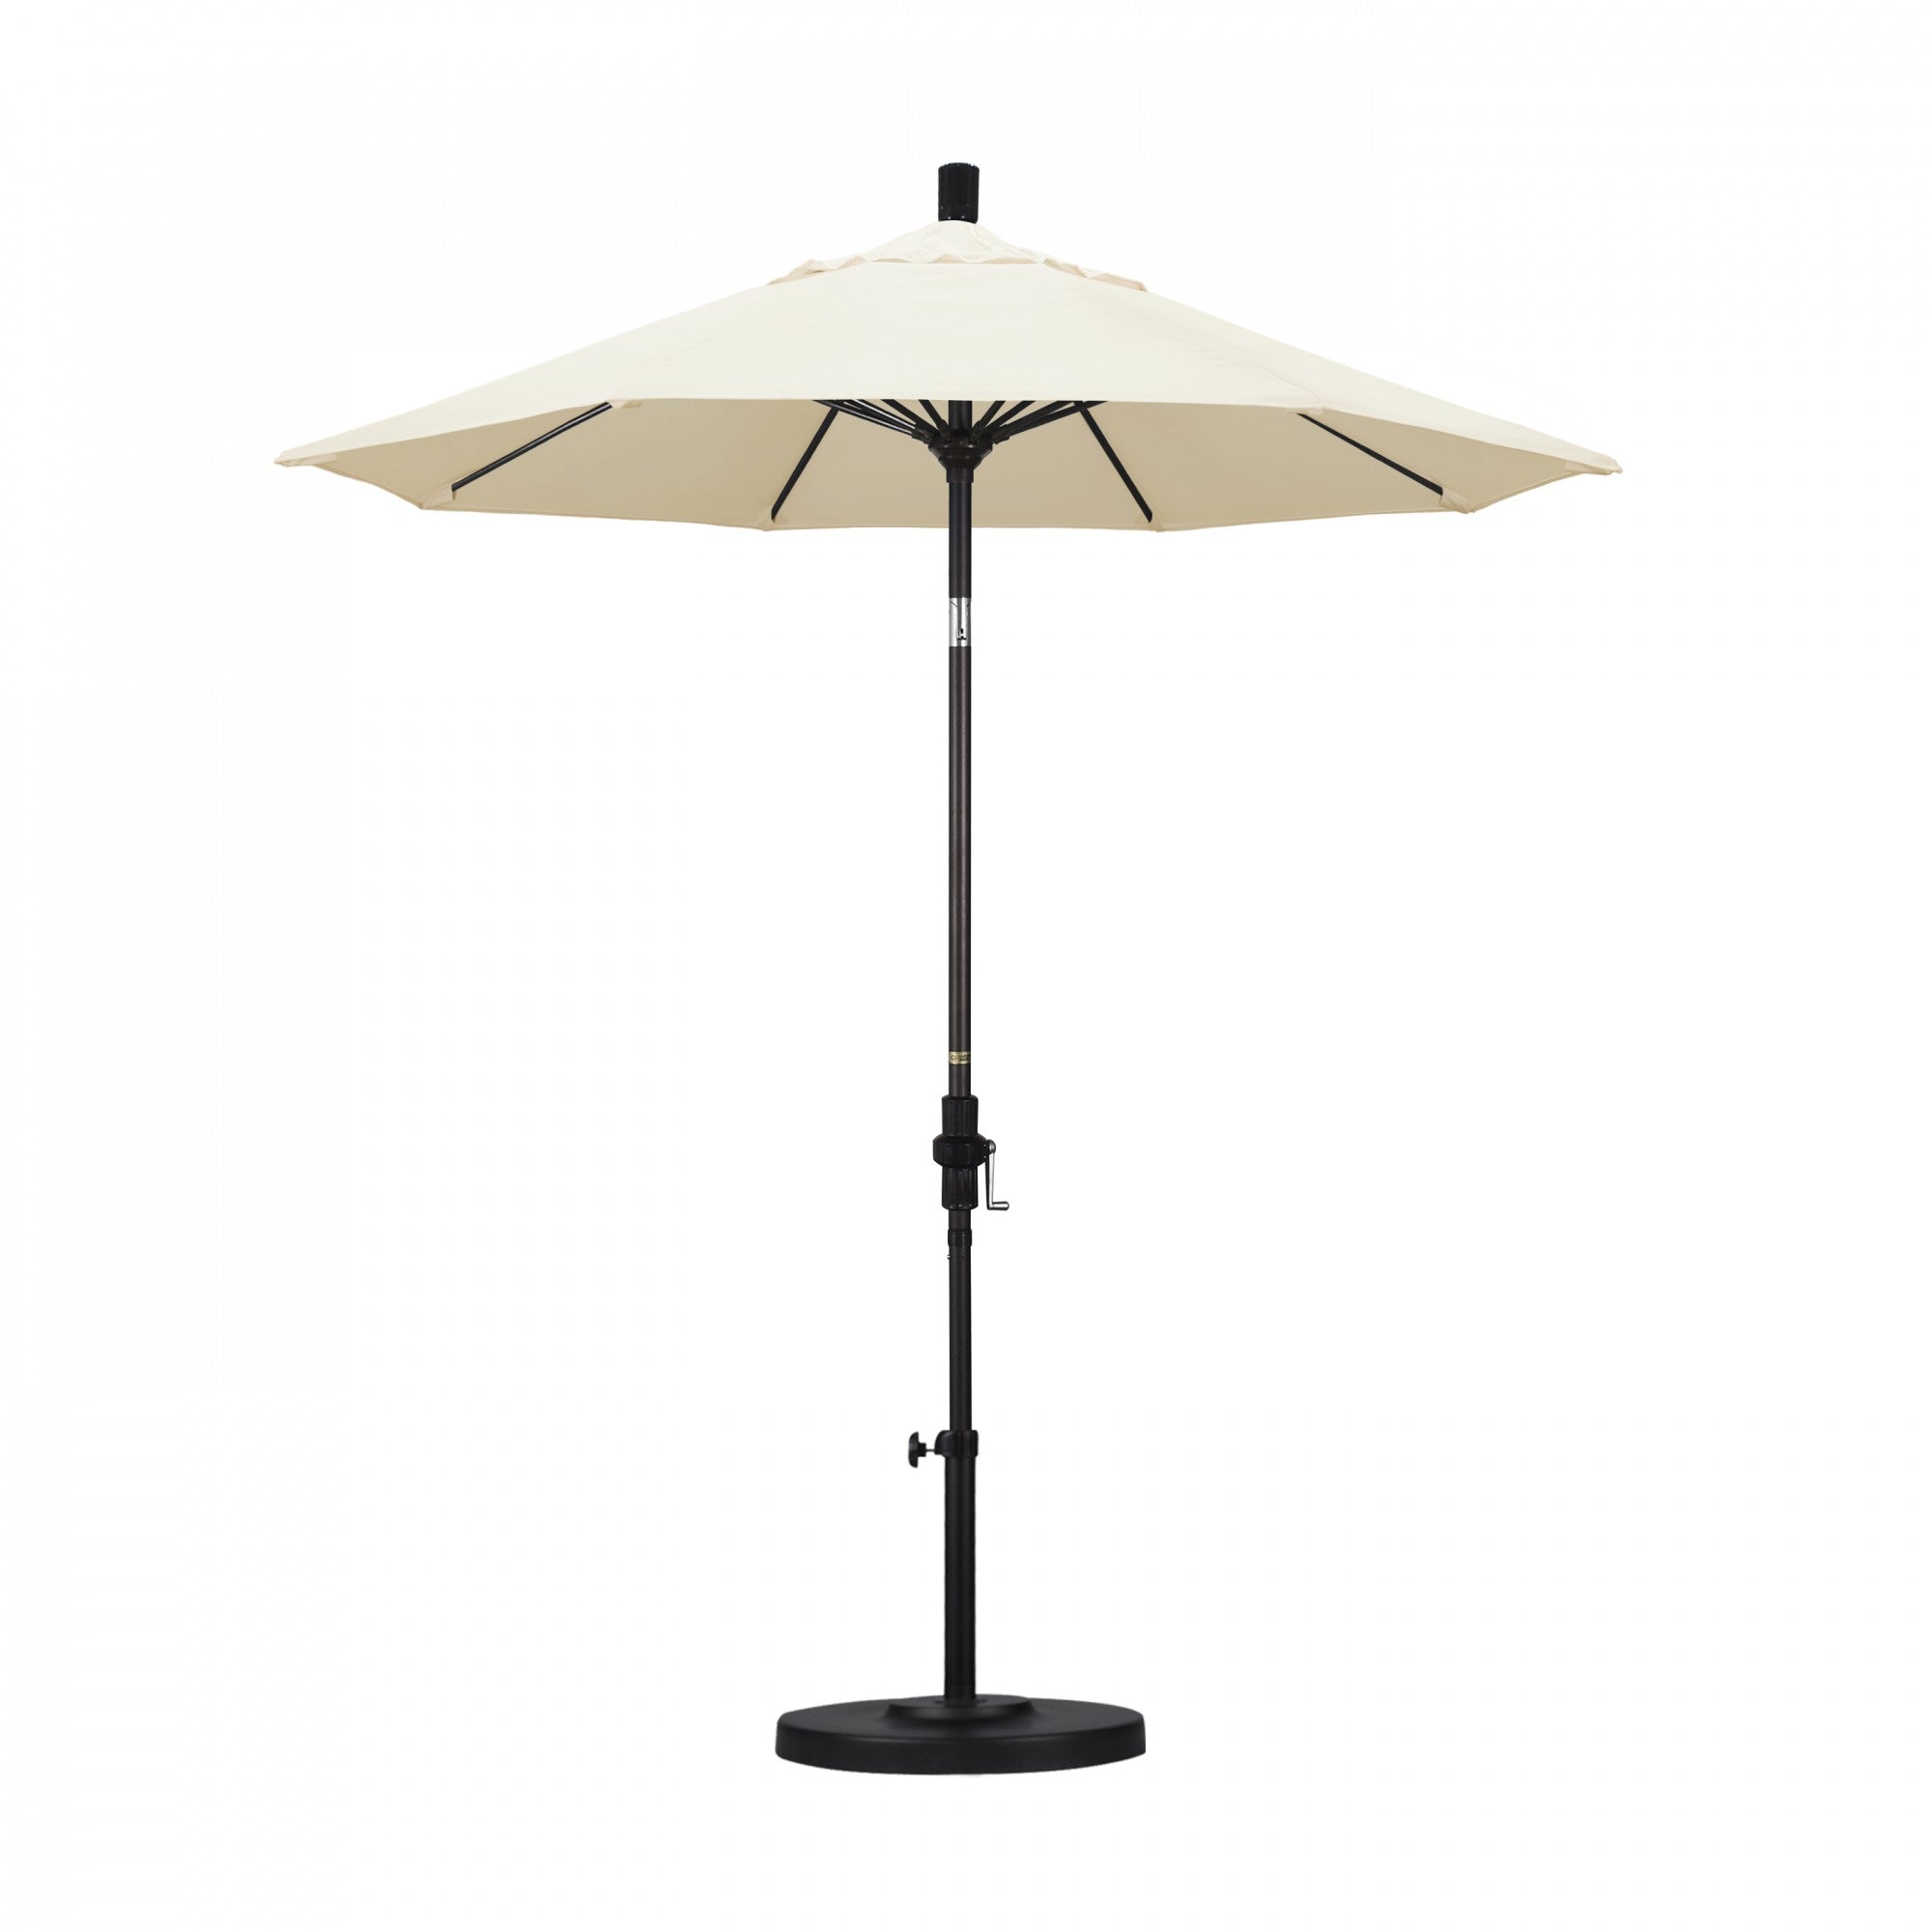 California Umbrella - 7.5' - Patio Umbrella Umbrella - Aluminum Pole - Canvas - Sunbrella  - GSCUF758117-5453